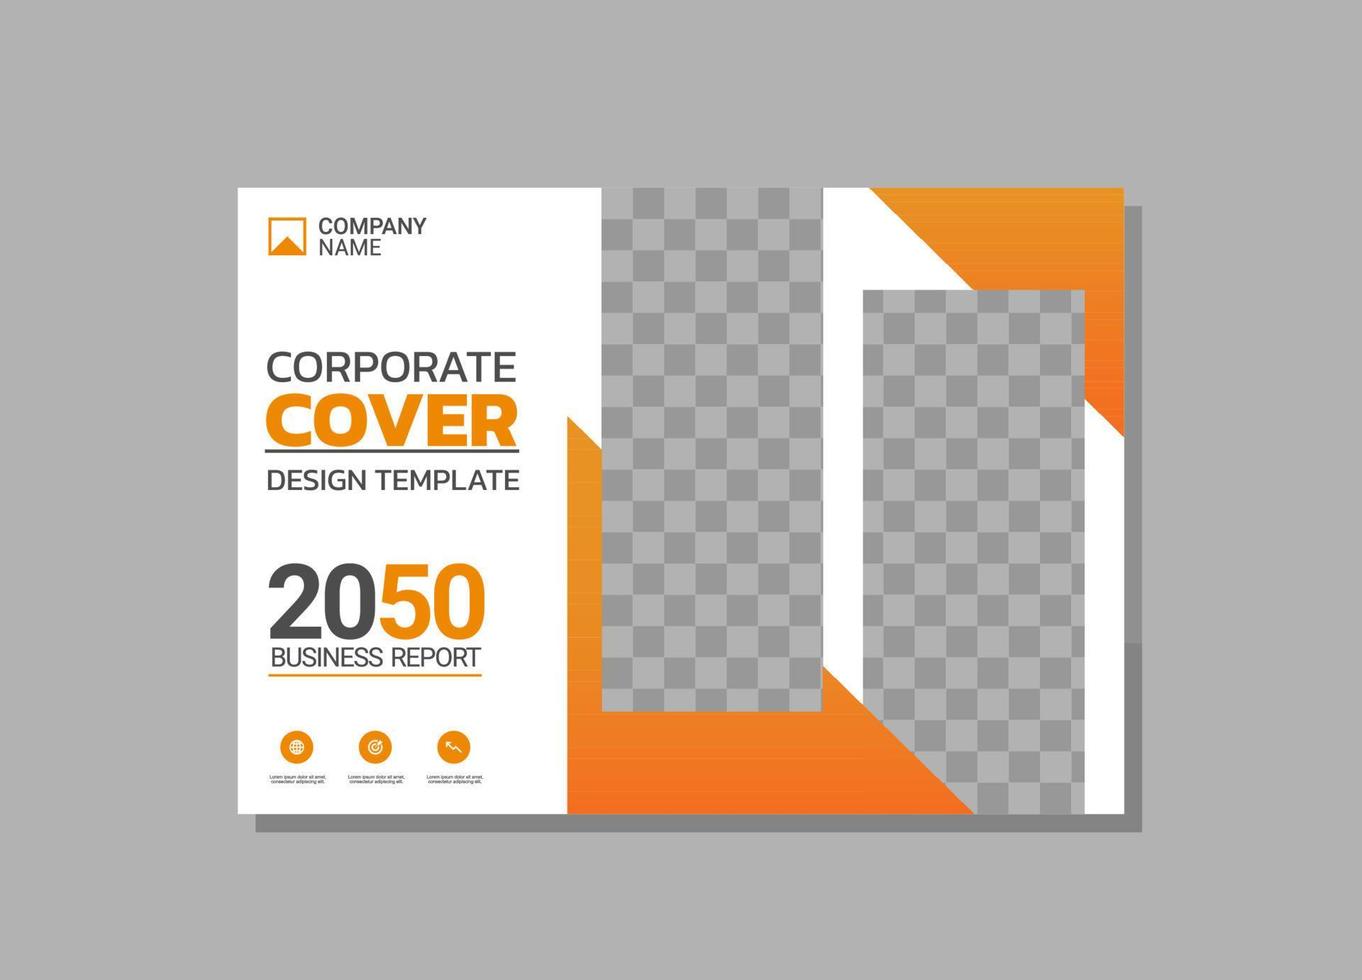 företags- bok omslag horisontell design vektor